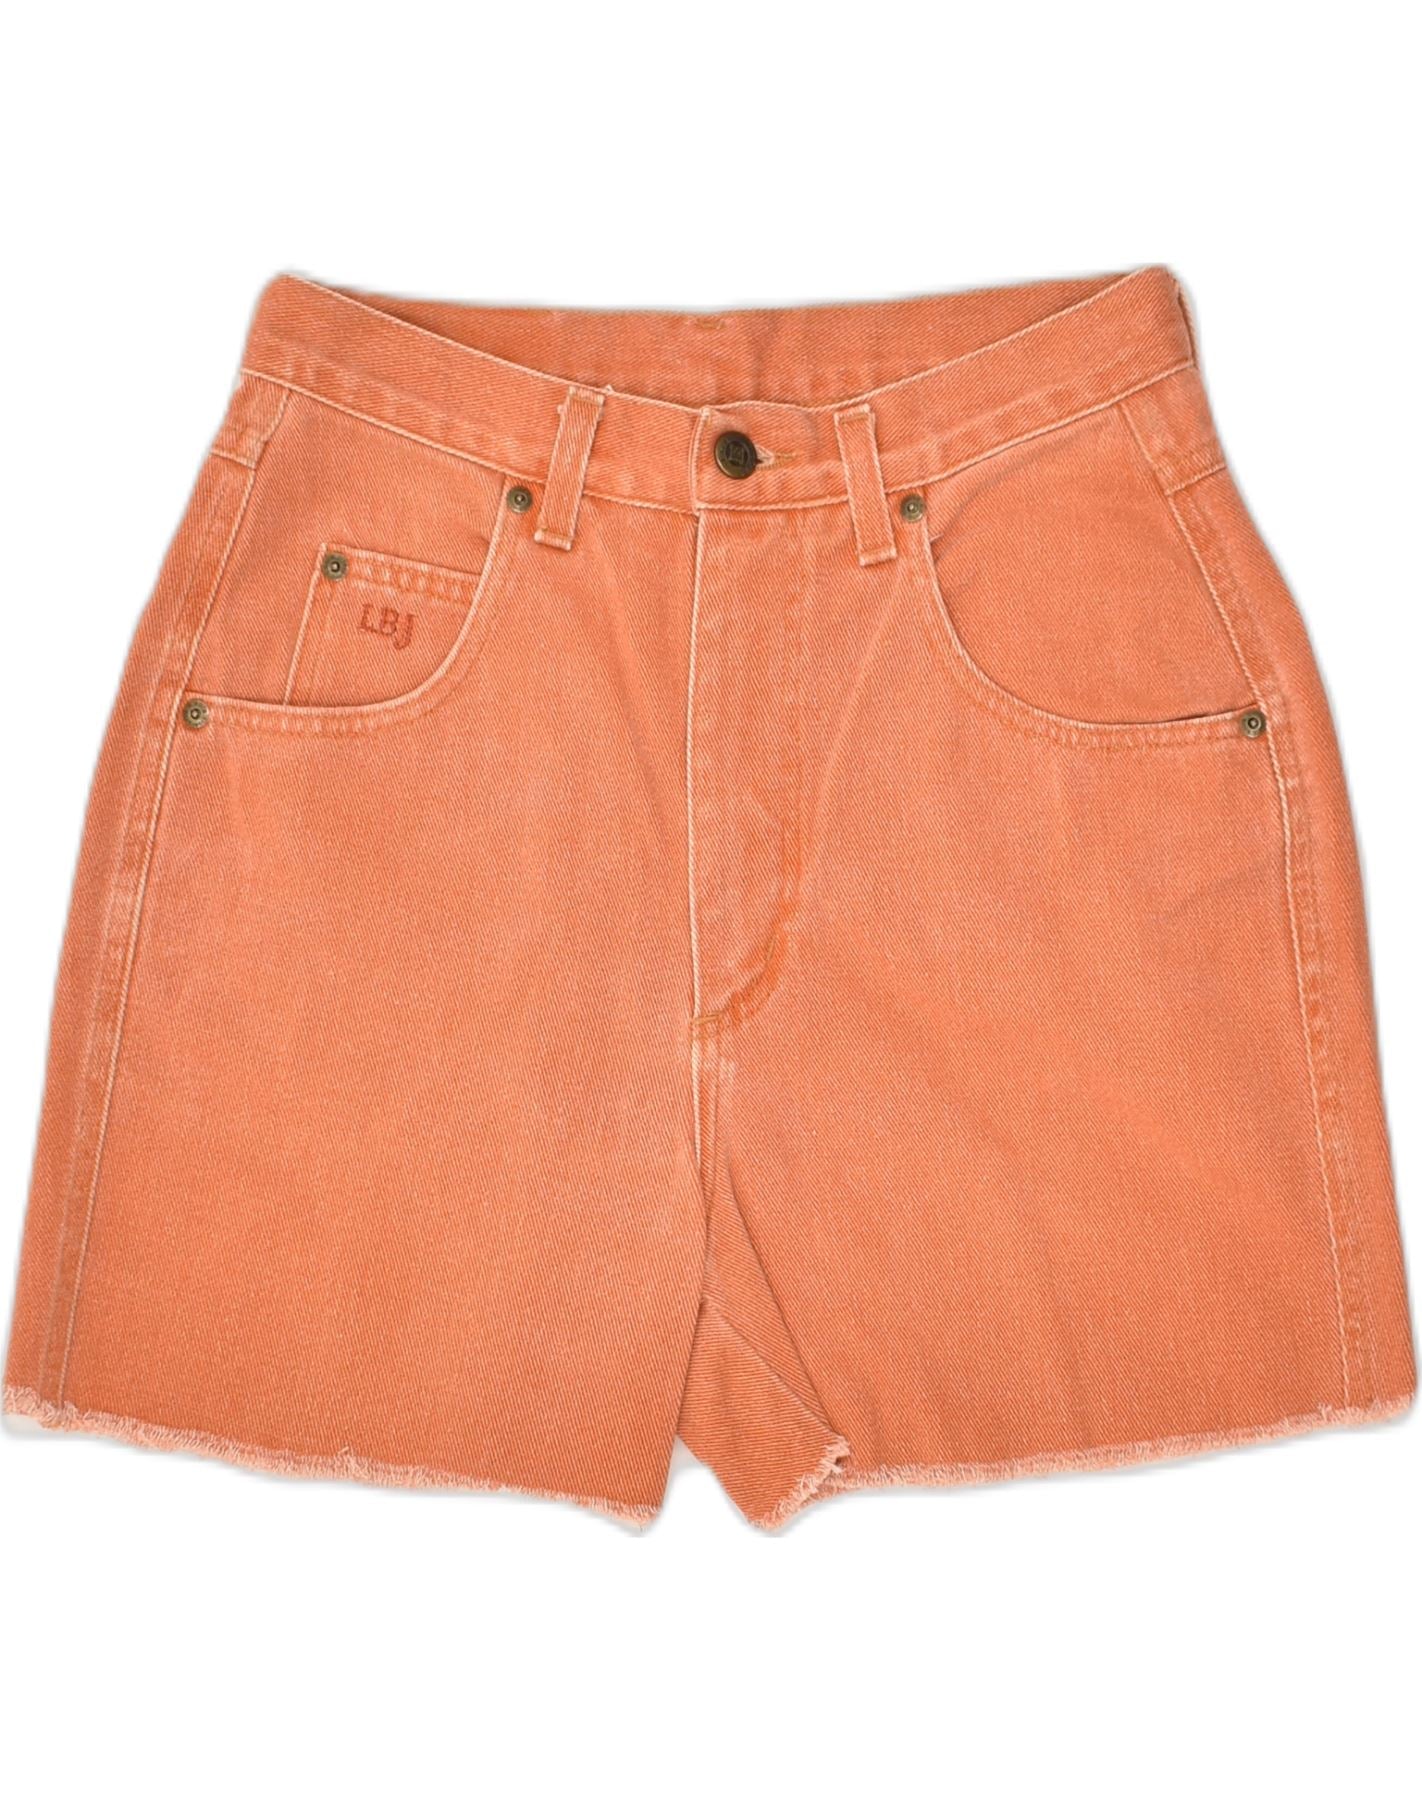 zuwimk Womens Shorts,Women High Waisted Denim Shorts Ripped Button Fly Jean  Shorts Orange,L - Walmart.com